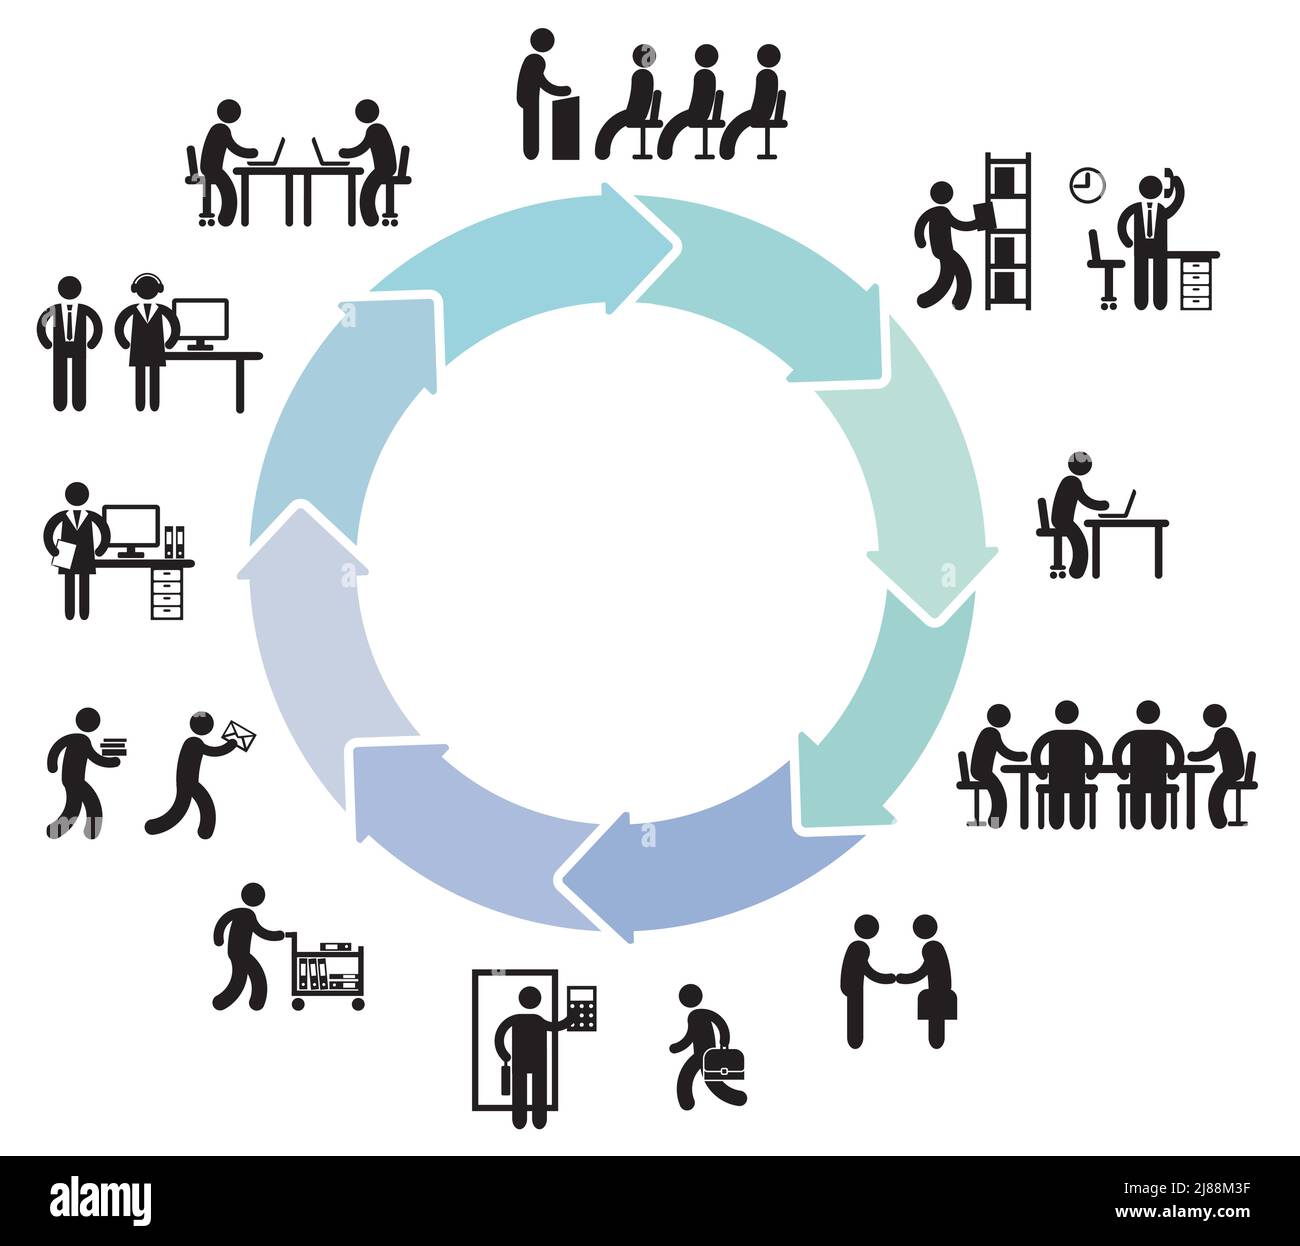 Büroarbeit und Organisation in Team-Informationen Illustration Stock Vektor